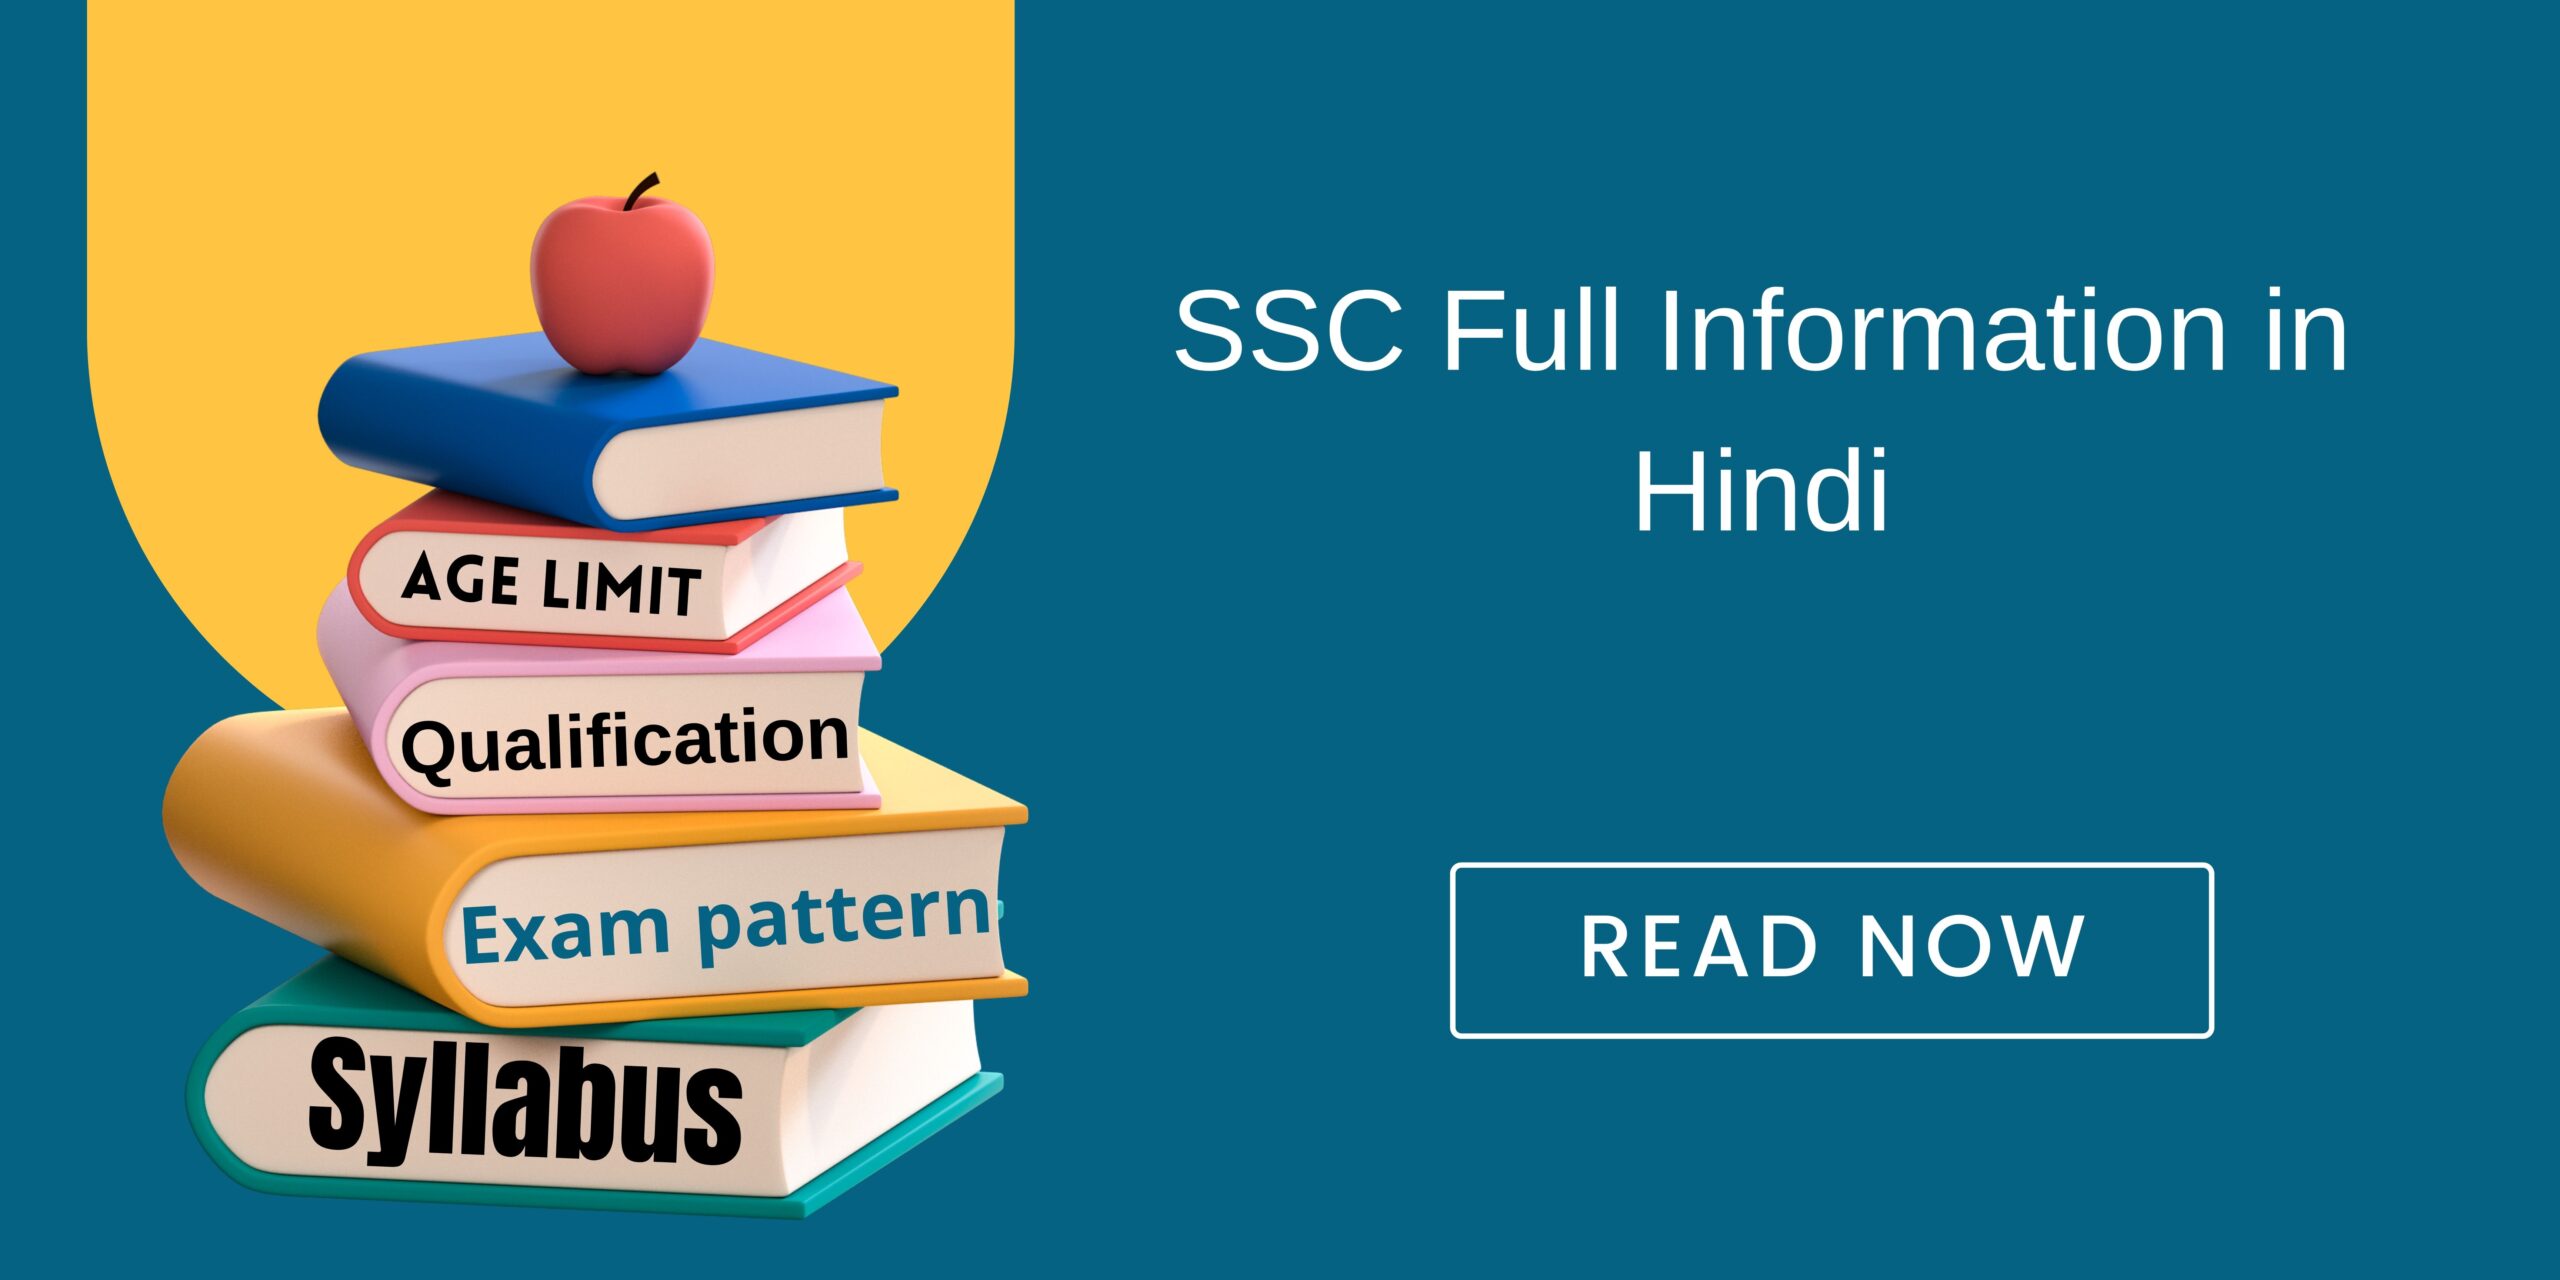 SSC Full Information In Hindi